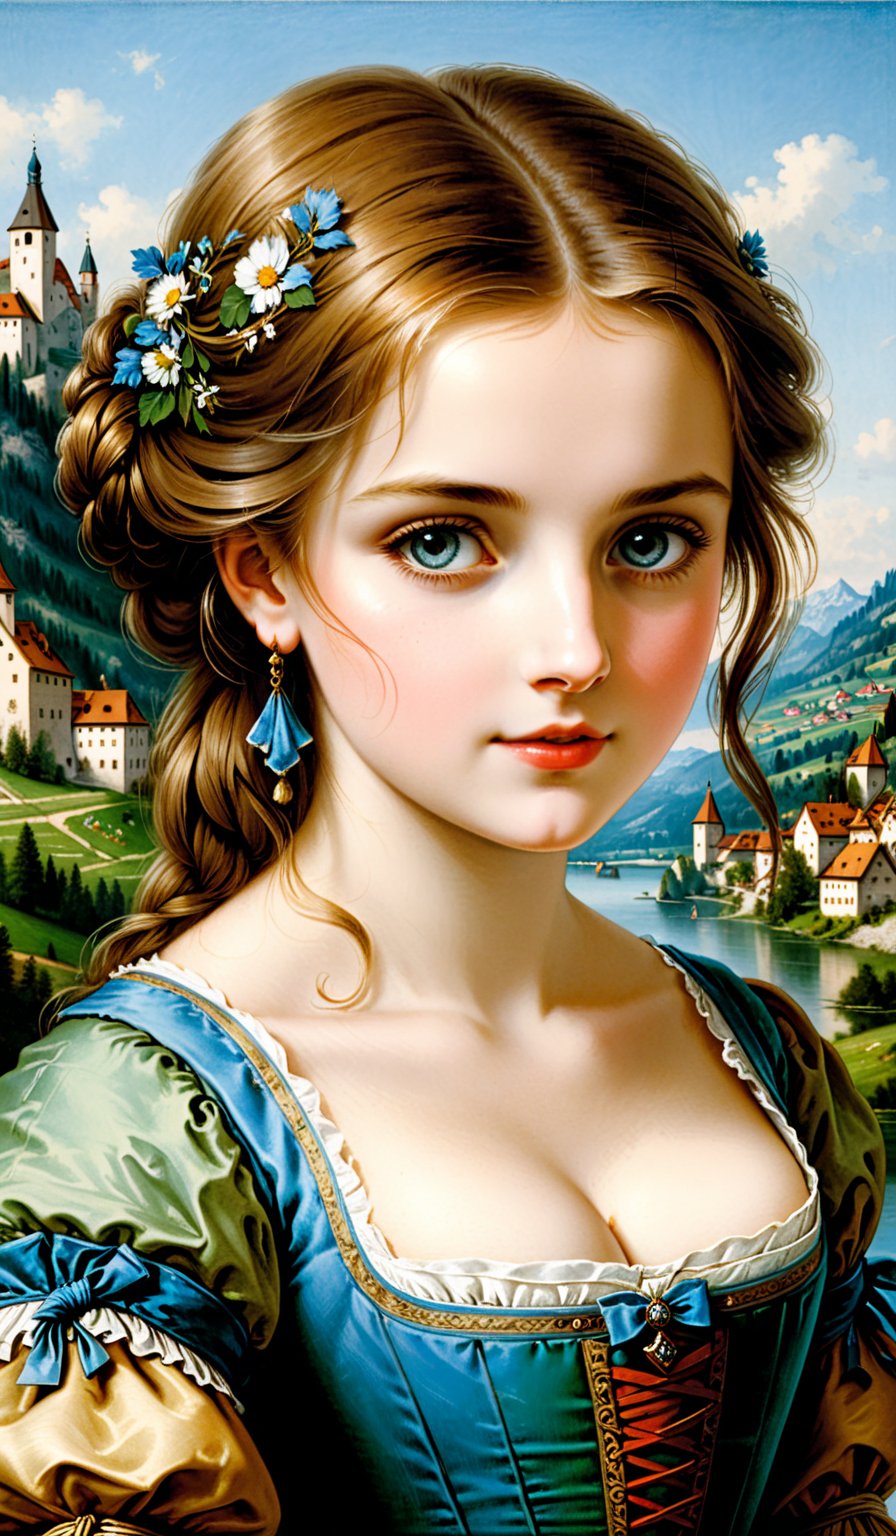 score_9, score_8_up, score_7_up, score_6_up, masterpiece,best quality,illustration,style of Leonardo portrait of Bavarian Girl,